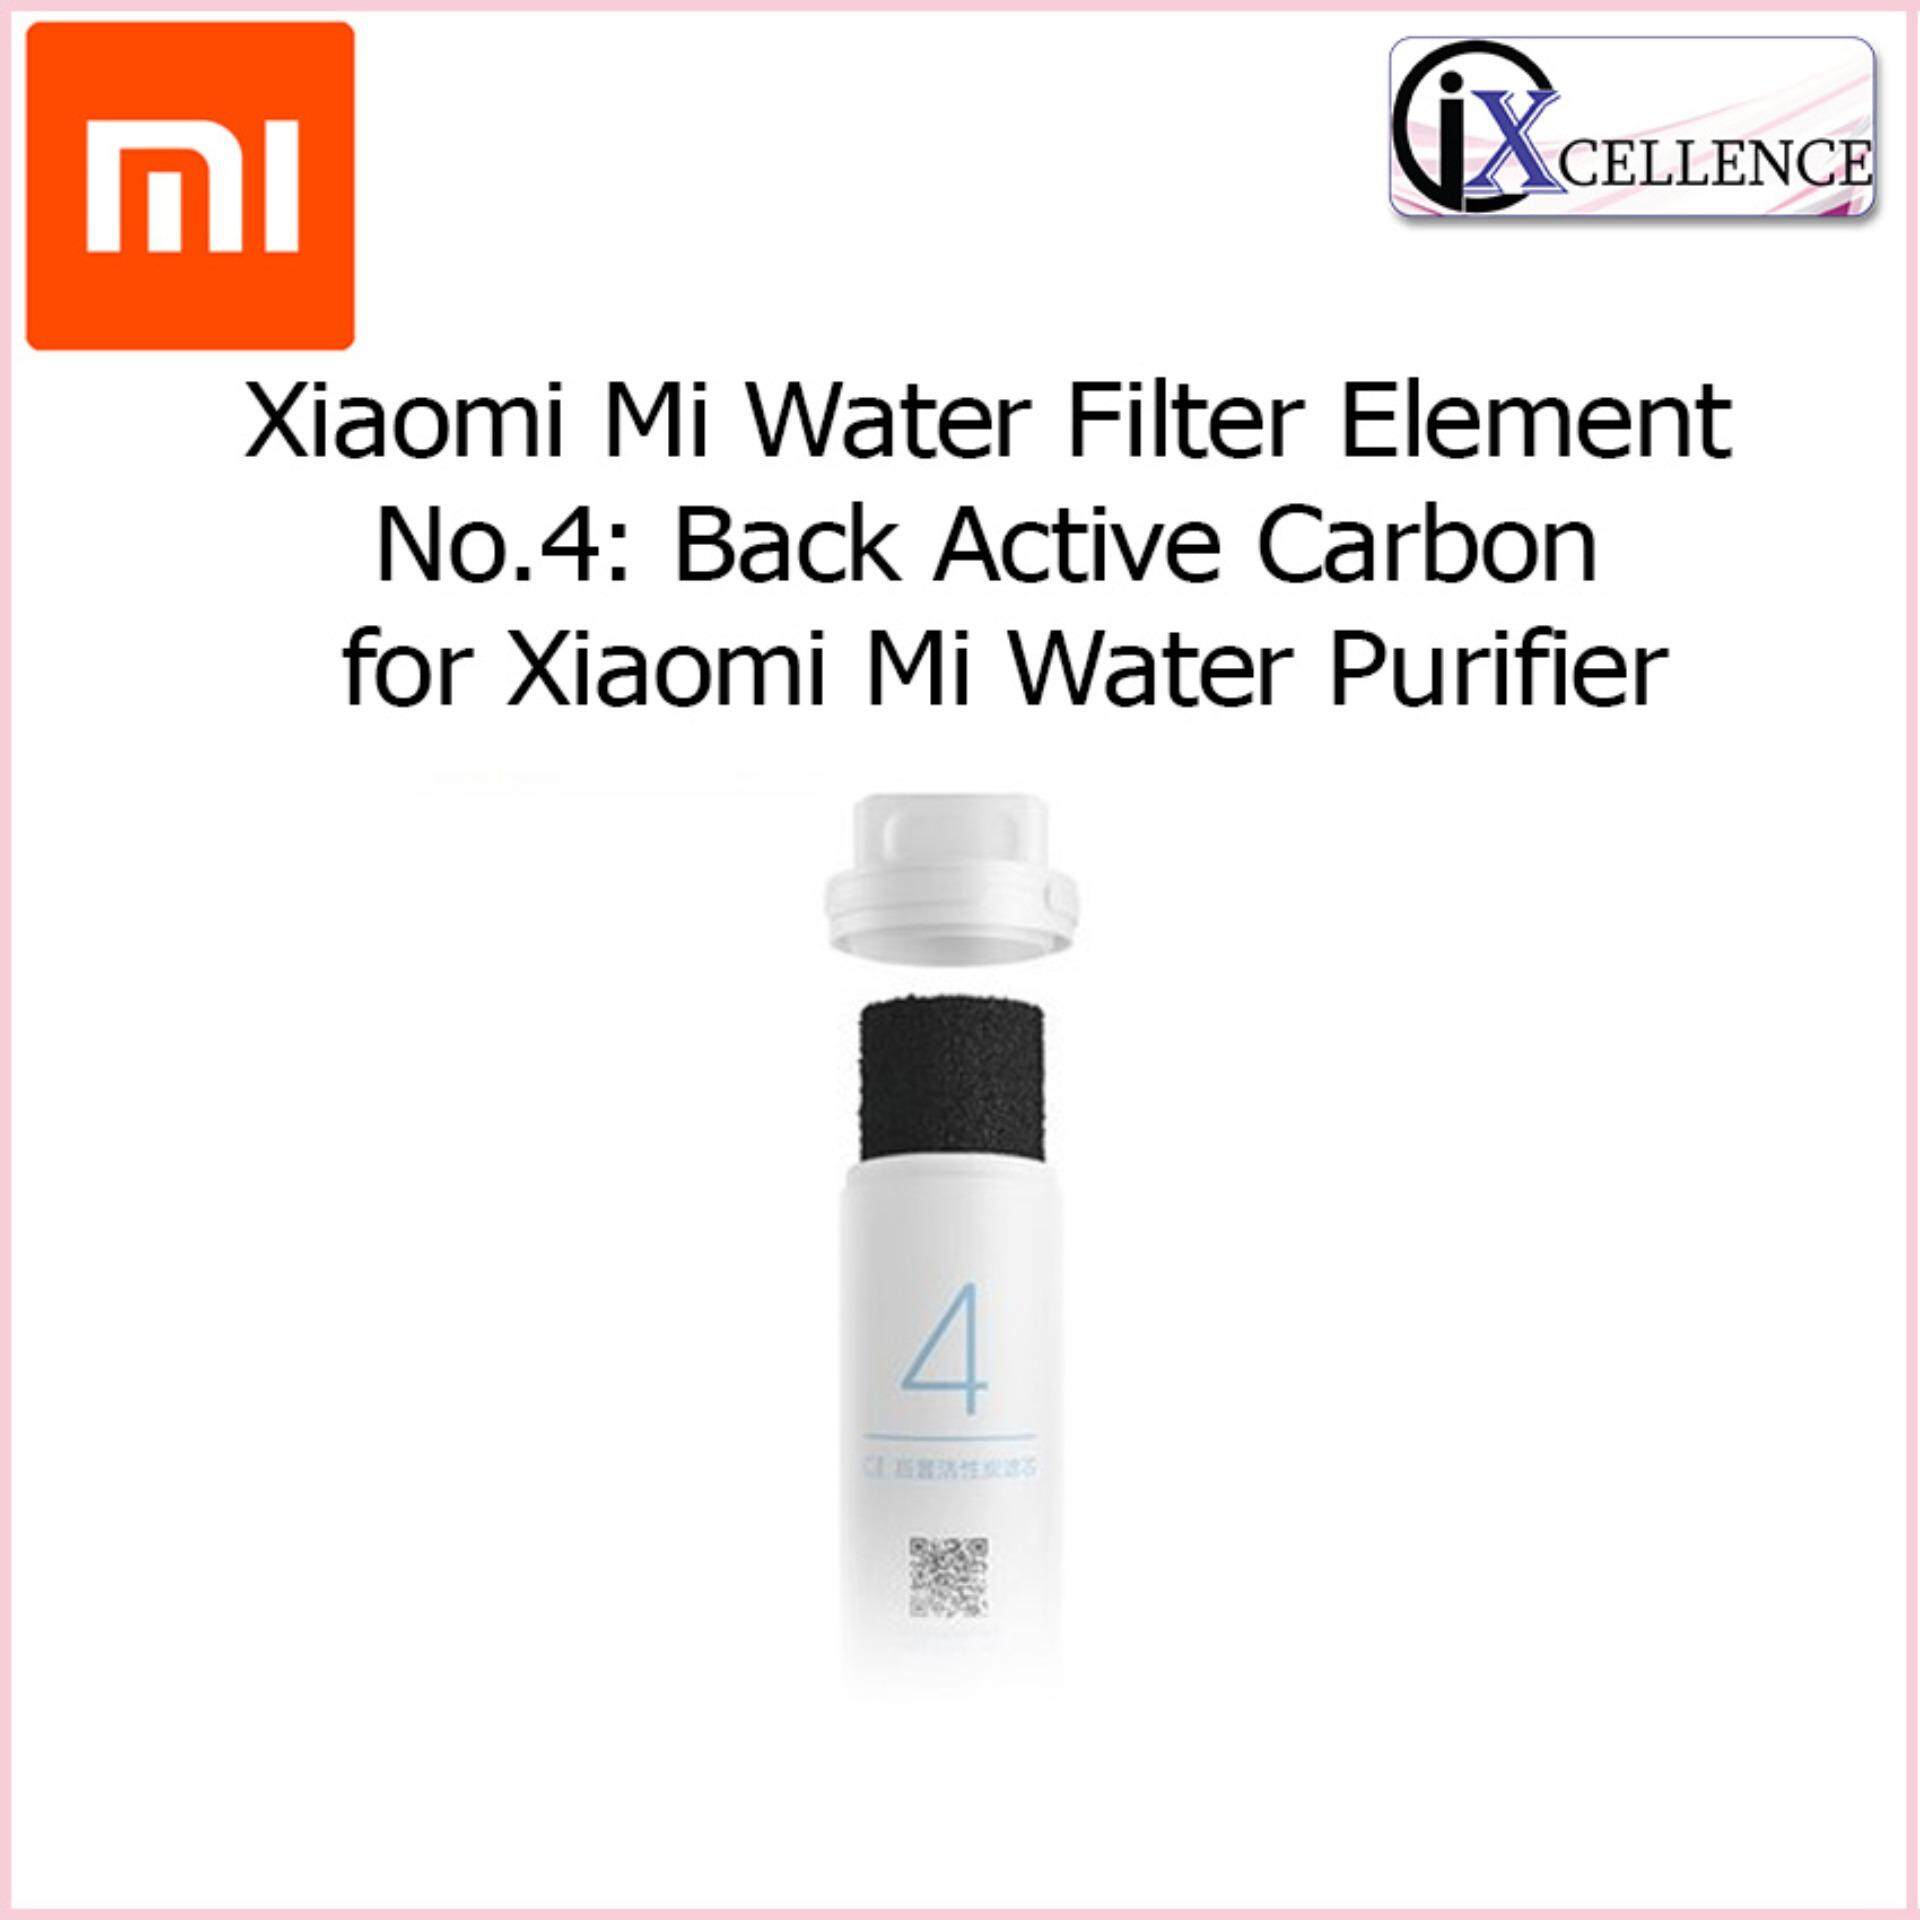 [IX] Xiaomi Mi Home Water Filter Element No.4: Back Active Carbon for Xiaomi Mi Water Purifier